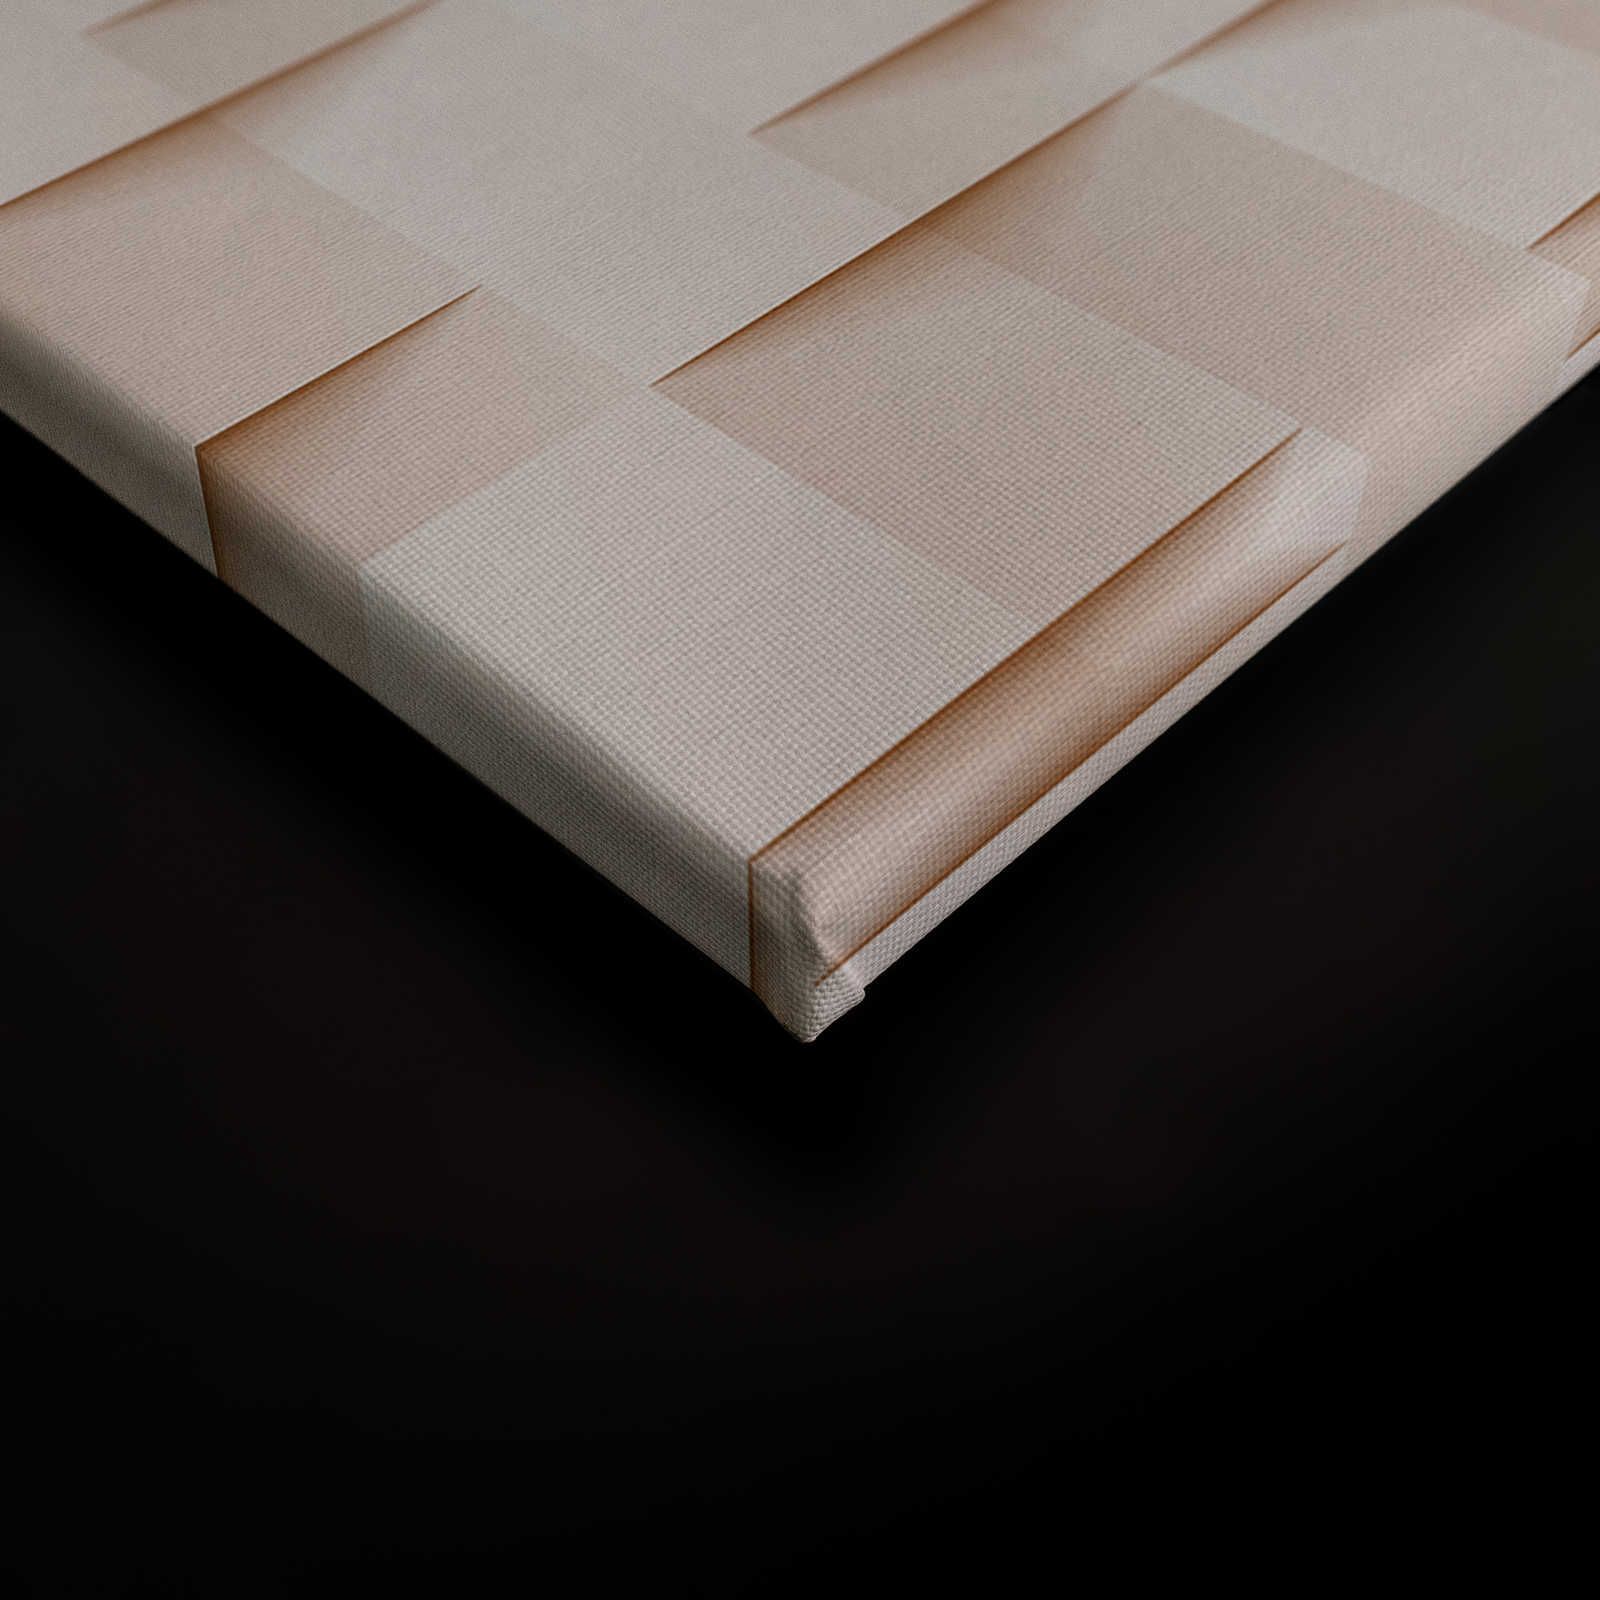             Paper House 1 - Leinwandbild 3D Struktur Papier Origami Falten – 0,90 m x 0,60 m
        